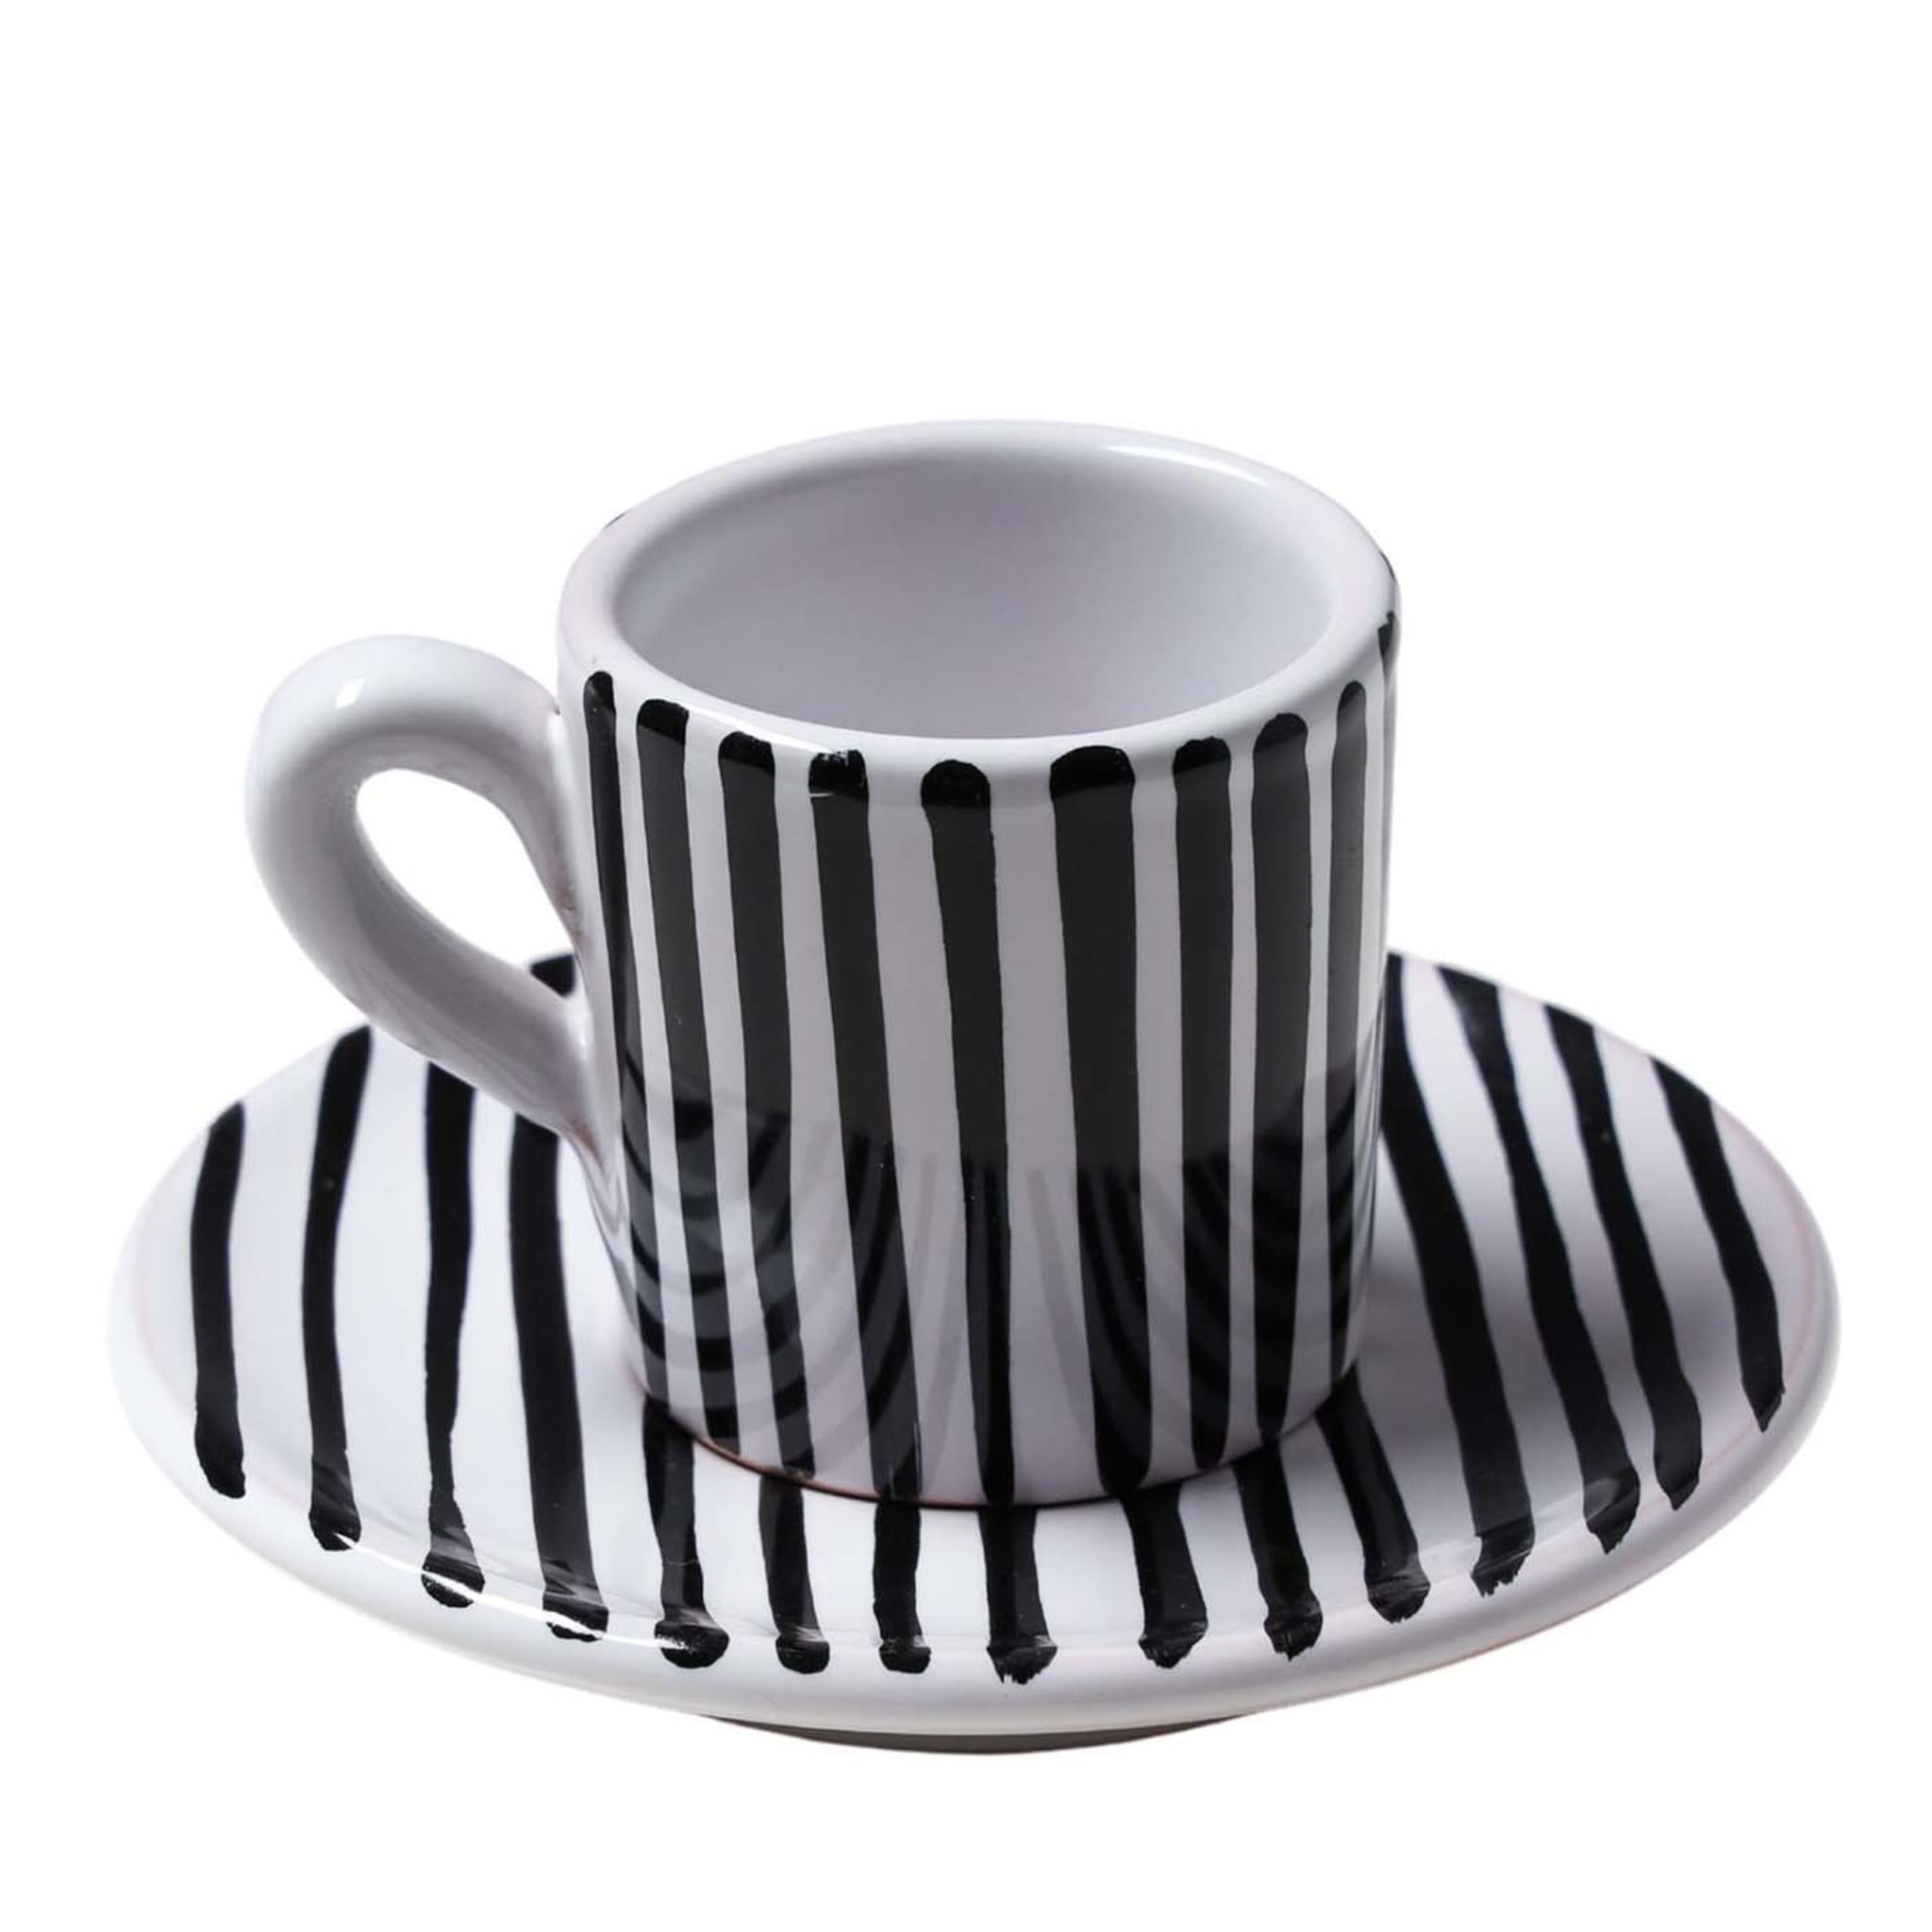 Set of 6 Black and White Stripe Espresso Cups - Main view